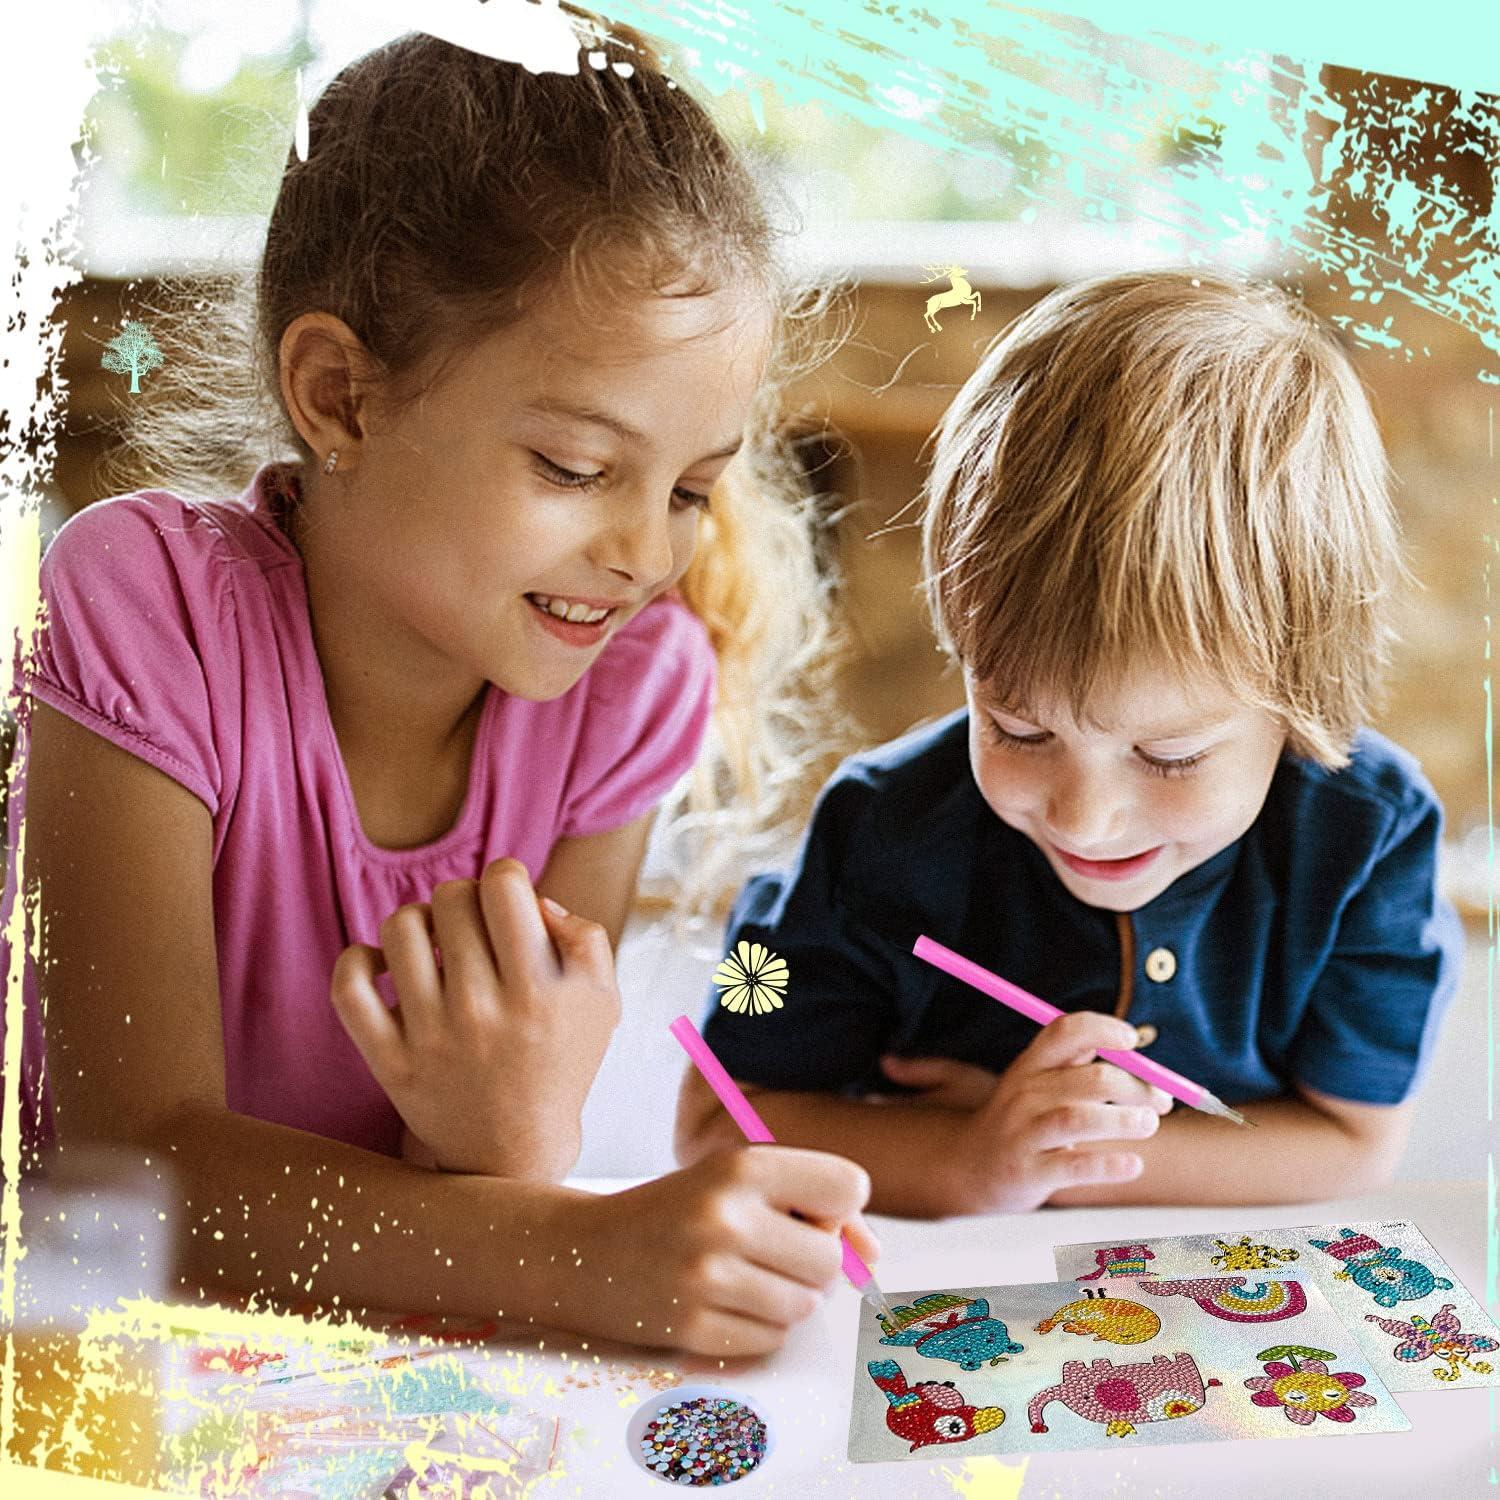 Sinceroduct 24 Pcs 5D DIY Kids Animal Diamond Painting Stickers Beginner Diamond Painting Kits Digital Diamond Paint